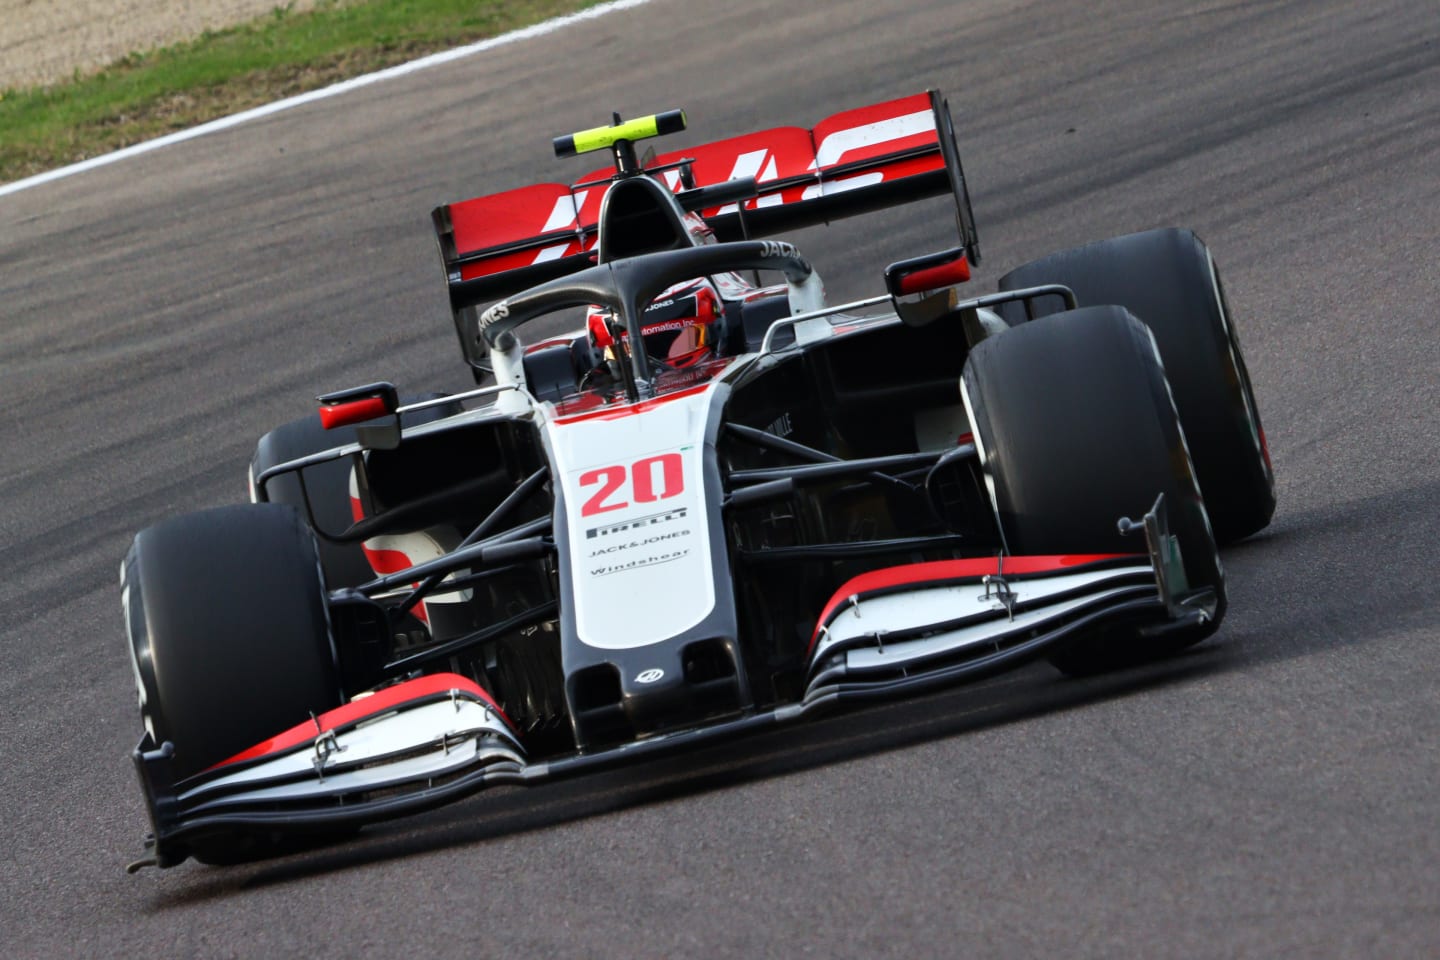 IMOLA, ITALY - NOVEMBER 01: Kevin Magnussen of Denmark driving the (20) Haas F1 Team VF-20 Ferrari